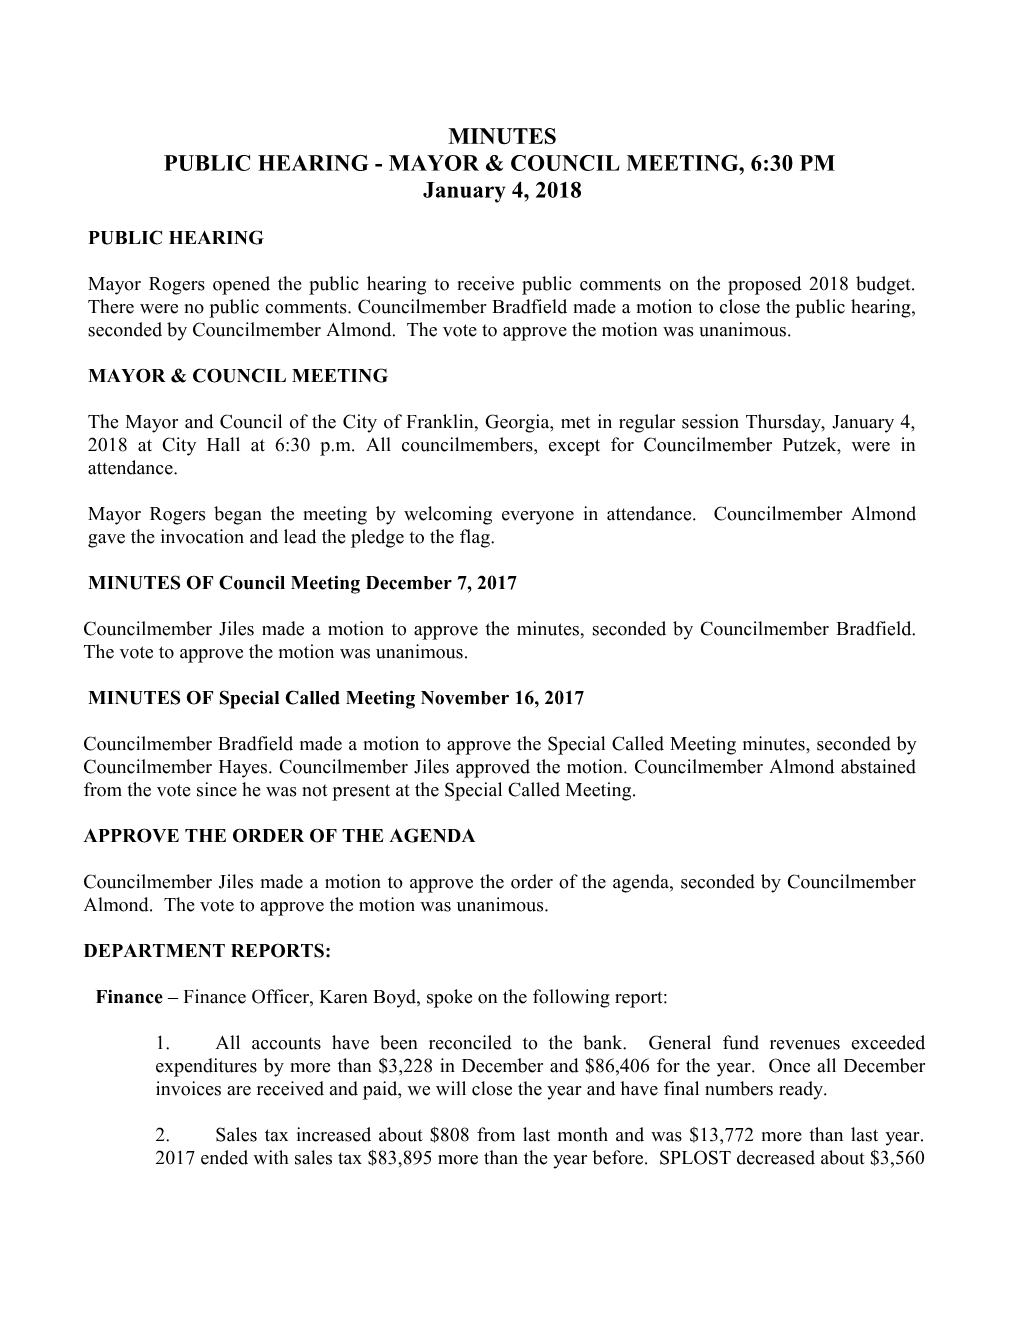 Public Hearing - Mayor & Council Meeting, 6:30 Pm